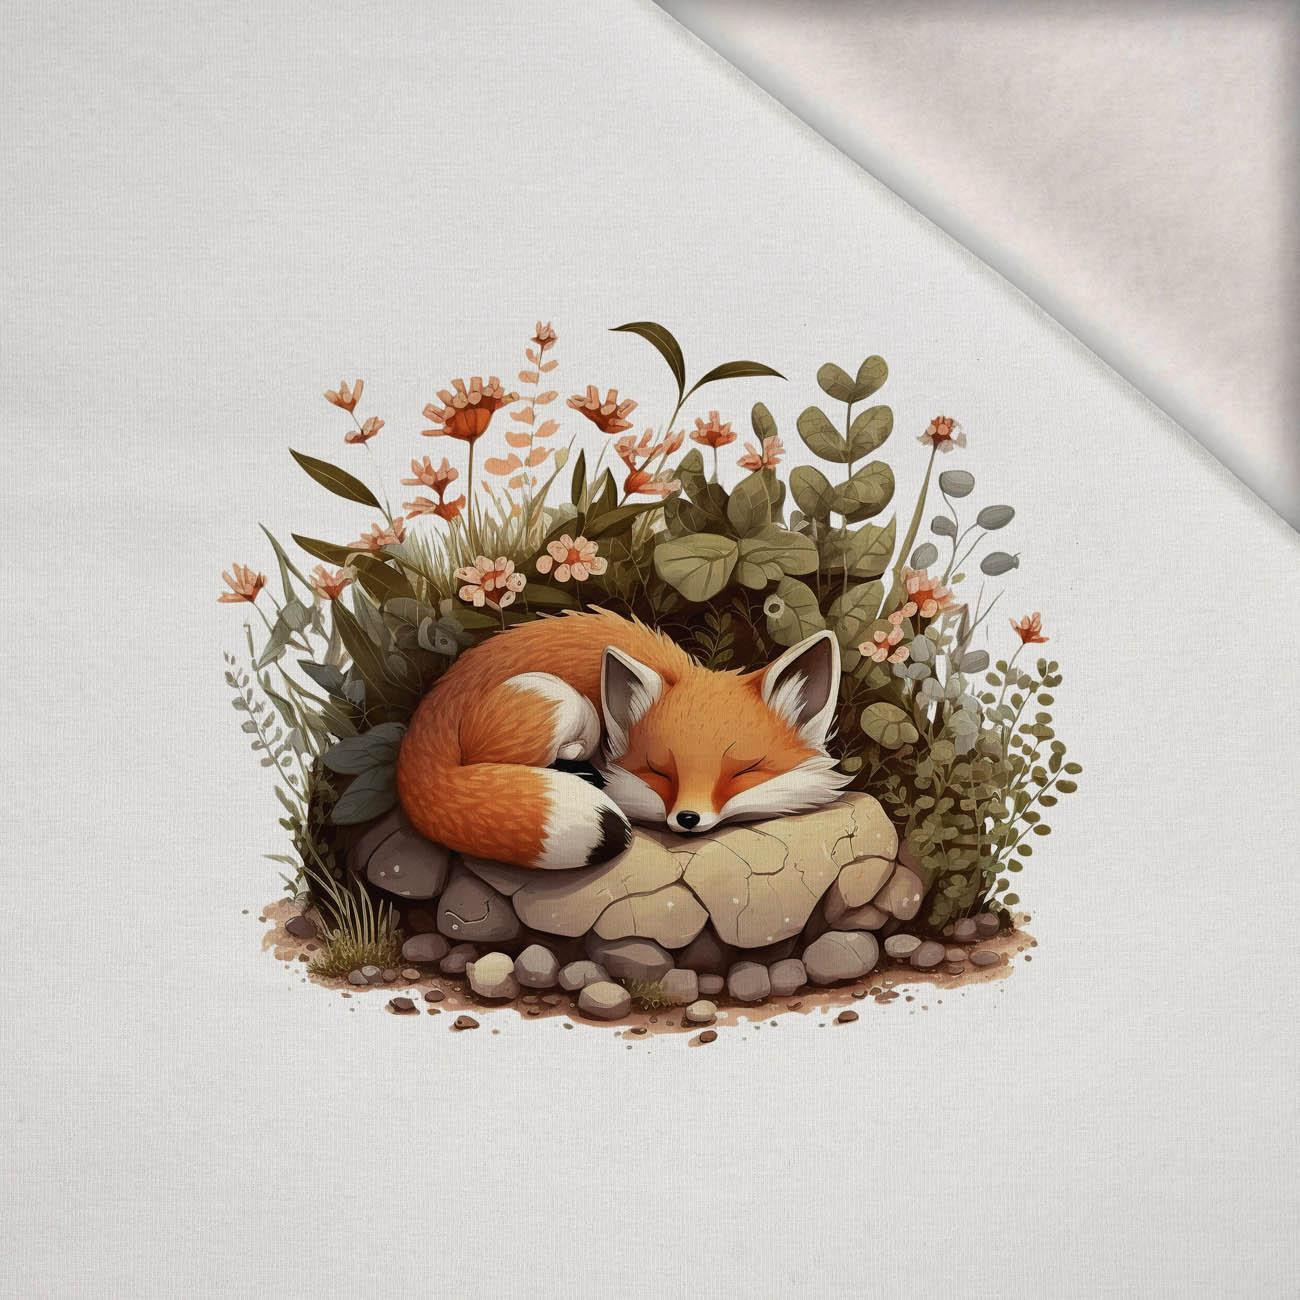 SLEEPING FOX -  PANEL (60cm x 50cm) brushed knitwear with elastane ITY